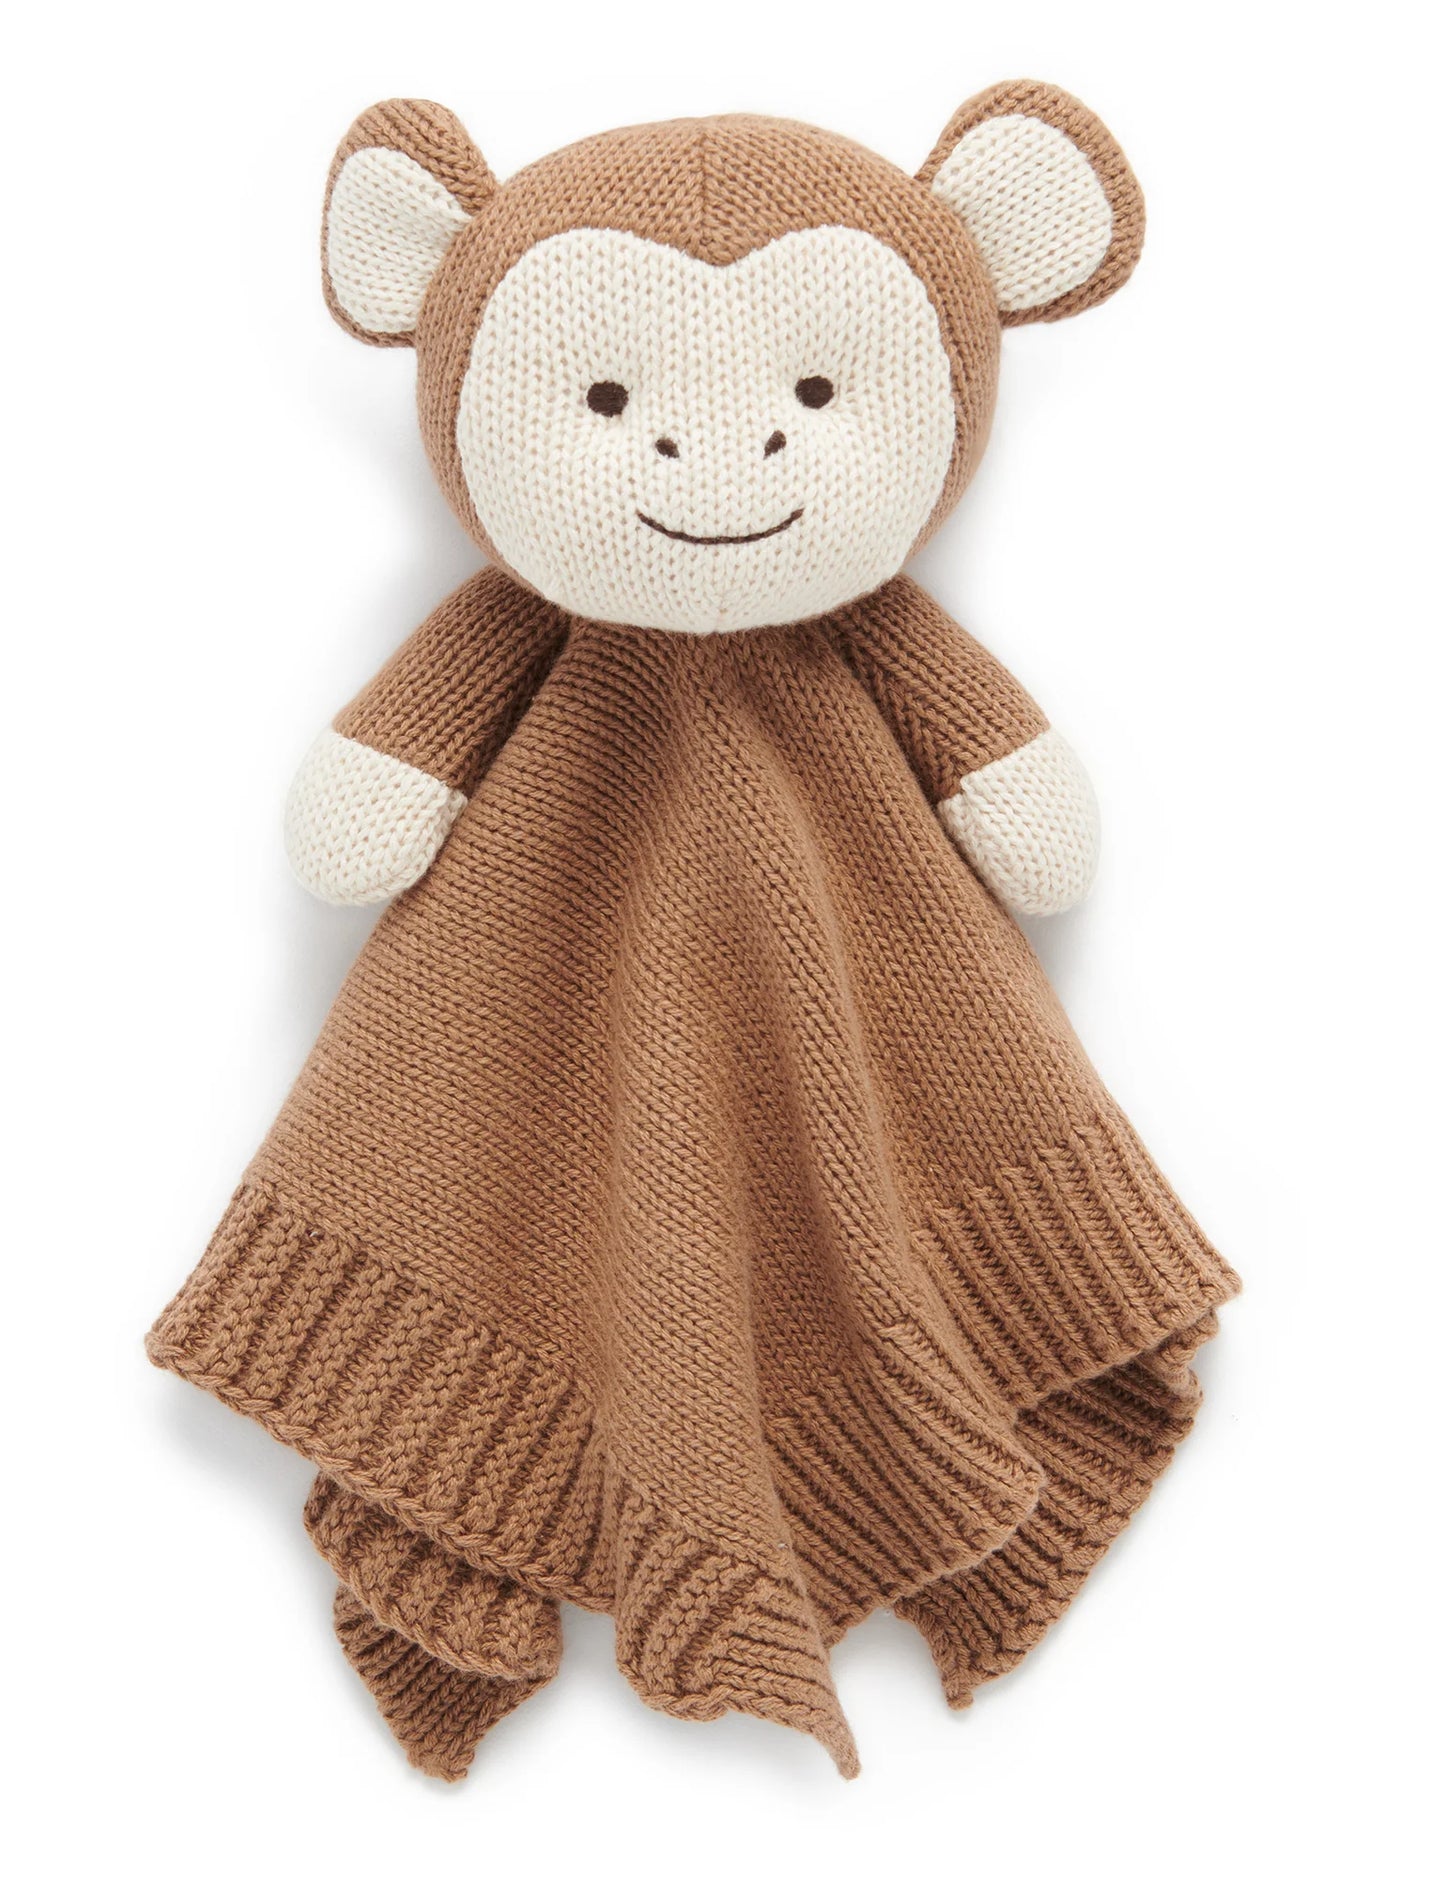 Knitted Monkey Comforter